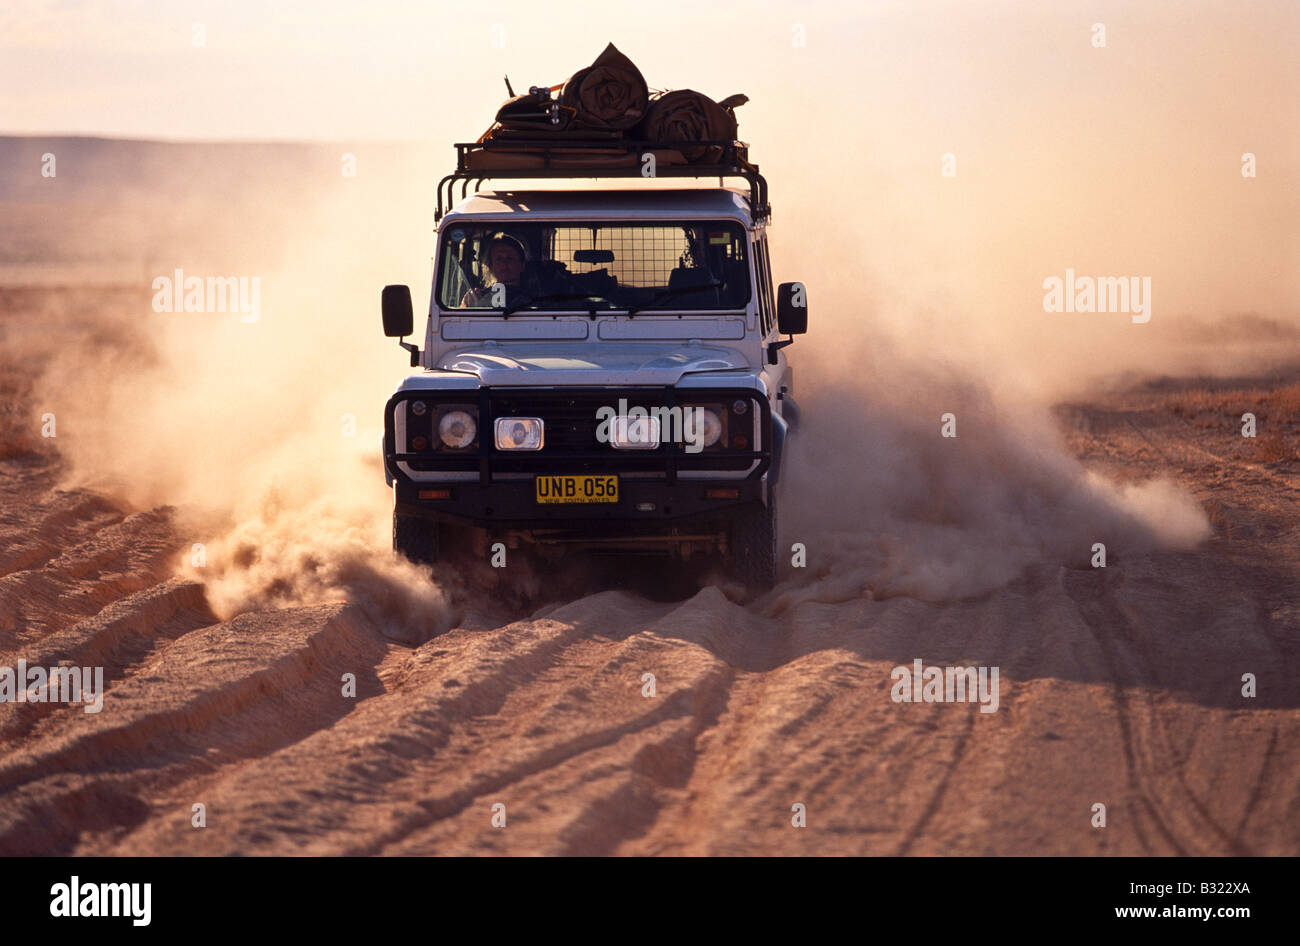 Outback Road, Central Australia Stockfoto